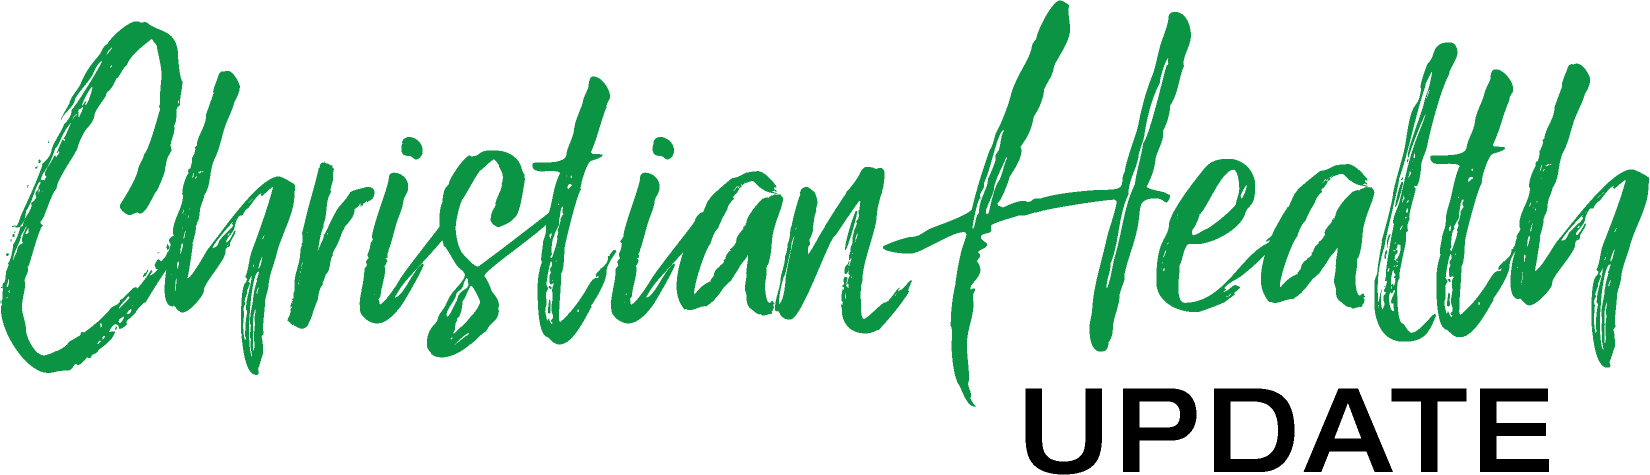 Christian Health Update Logo